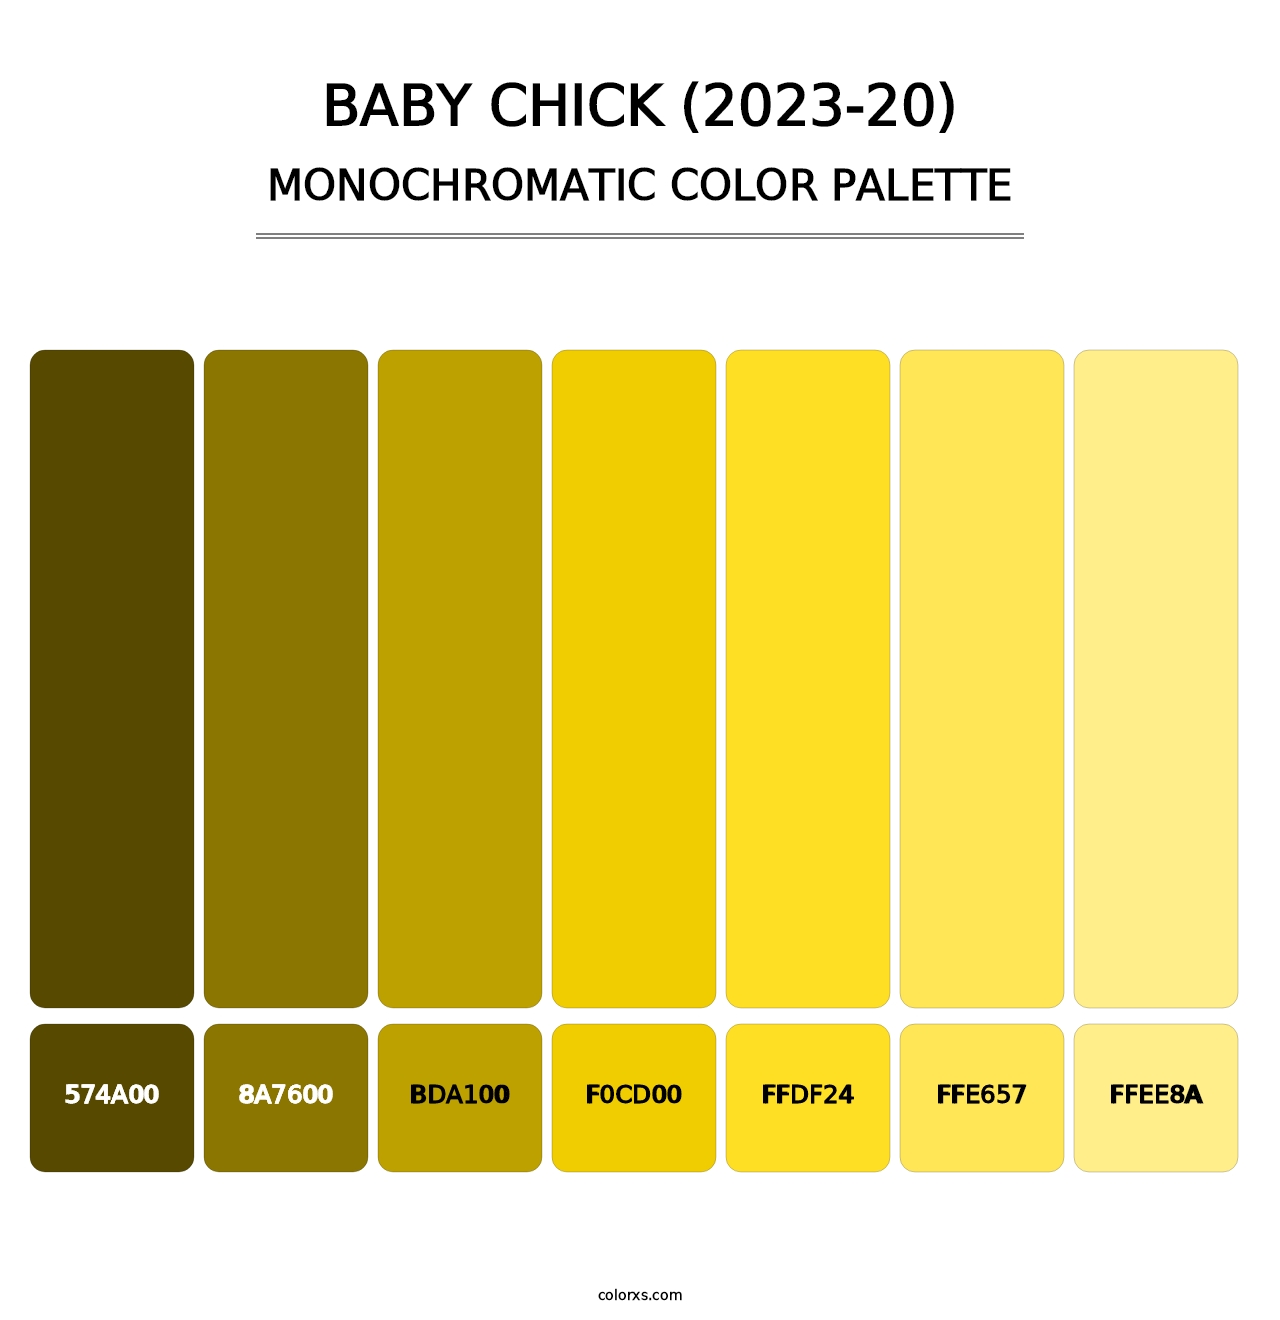 Baby Chick (2023-20) - Monochromatic Color Palette